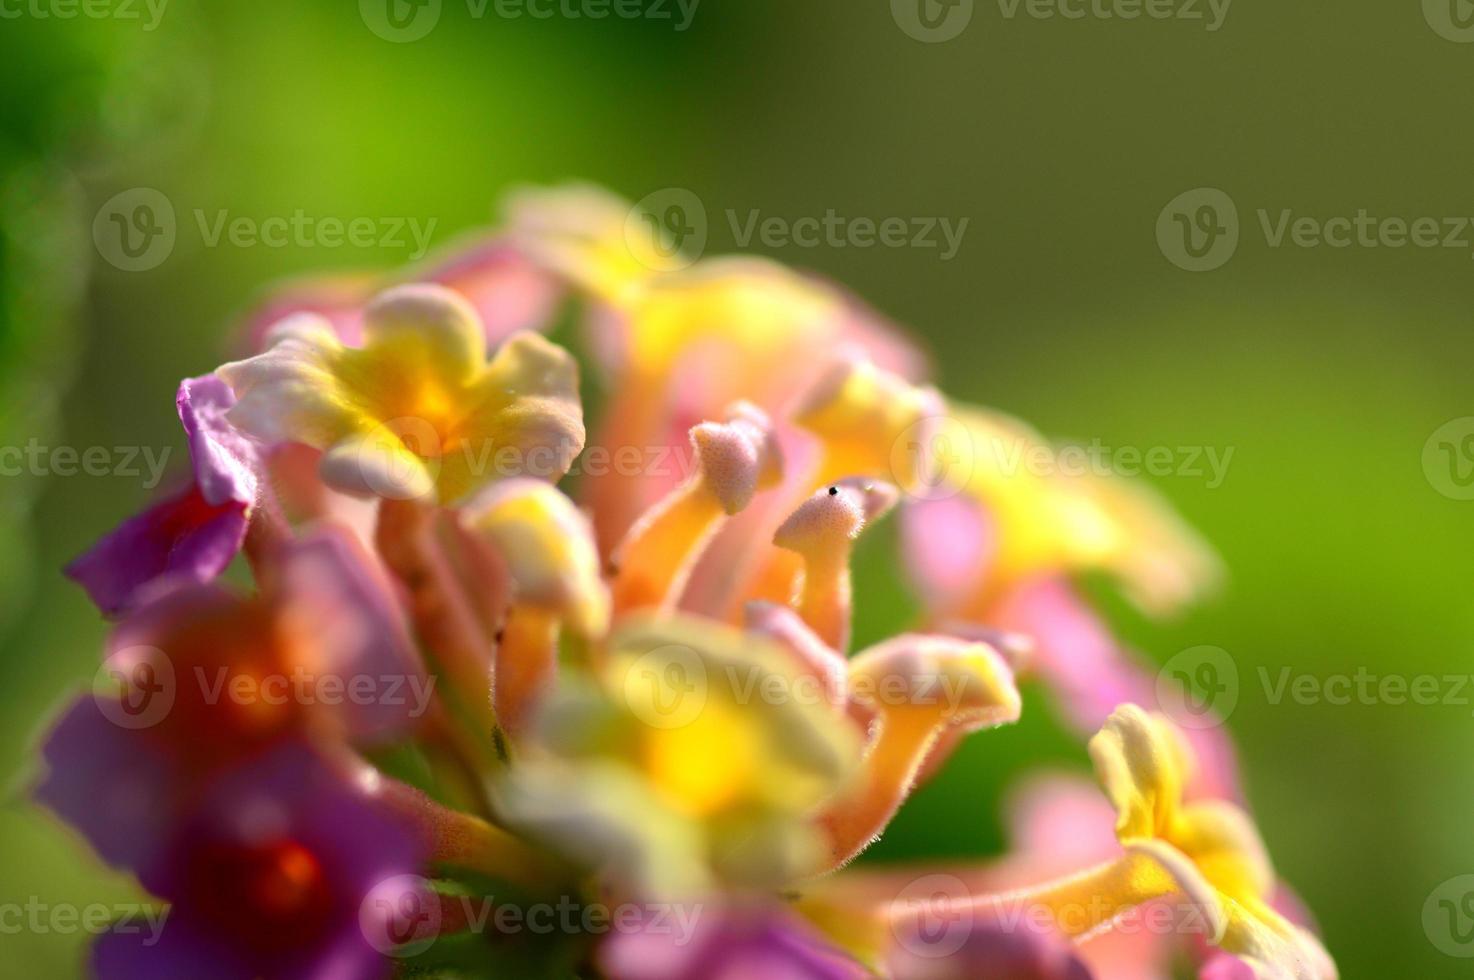 flores de lantana multicoloridas. bela flor de cerca viva colorida, lantana chorona, foto